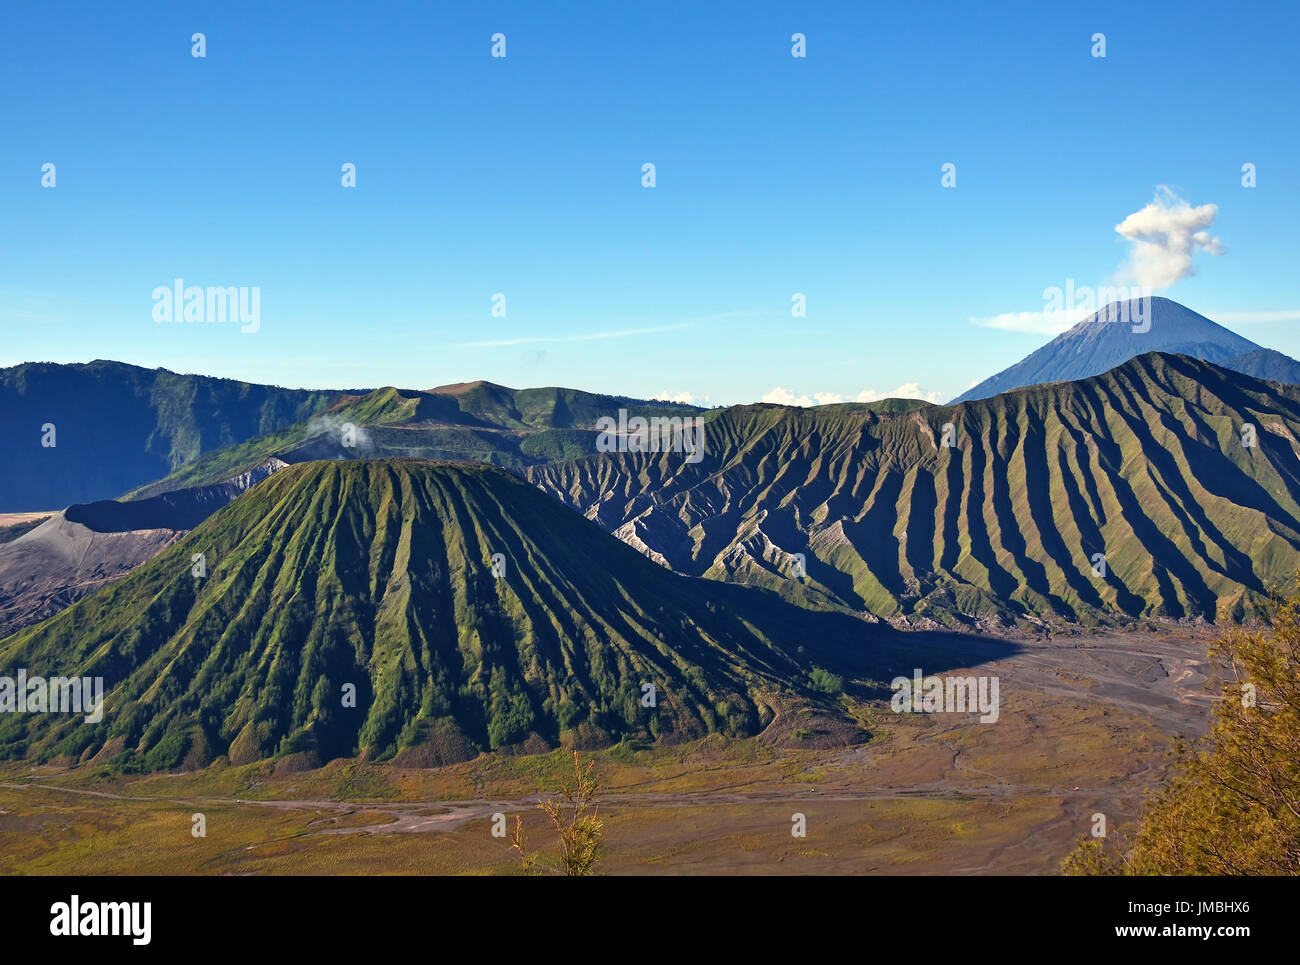 Mount Bromo, Tengger, Semeru national park in East Java, Indonesia. Stock Photo